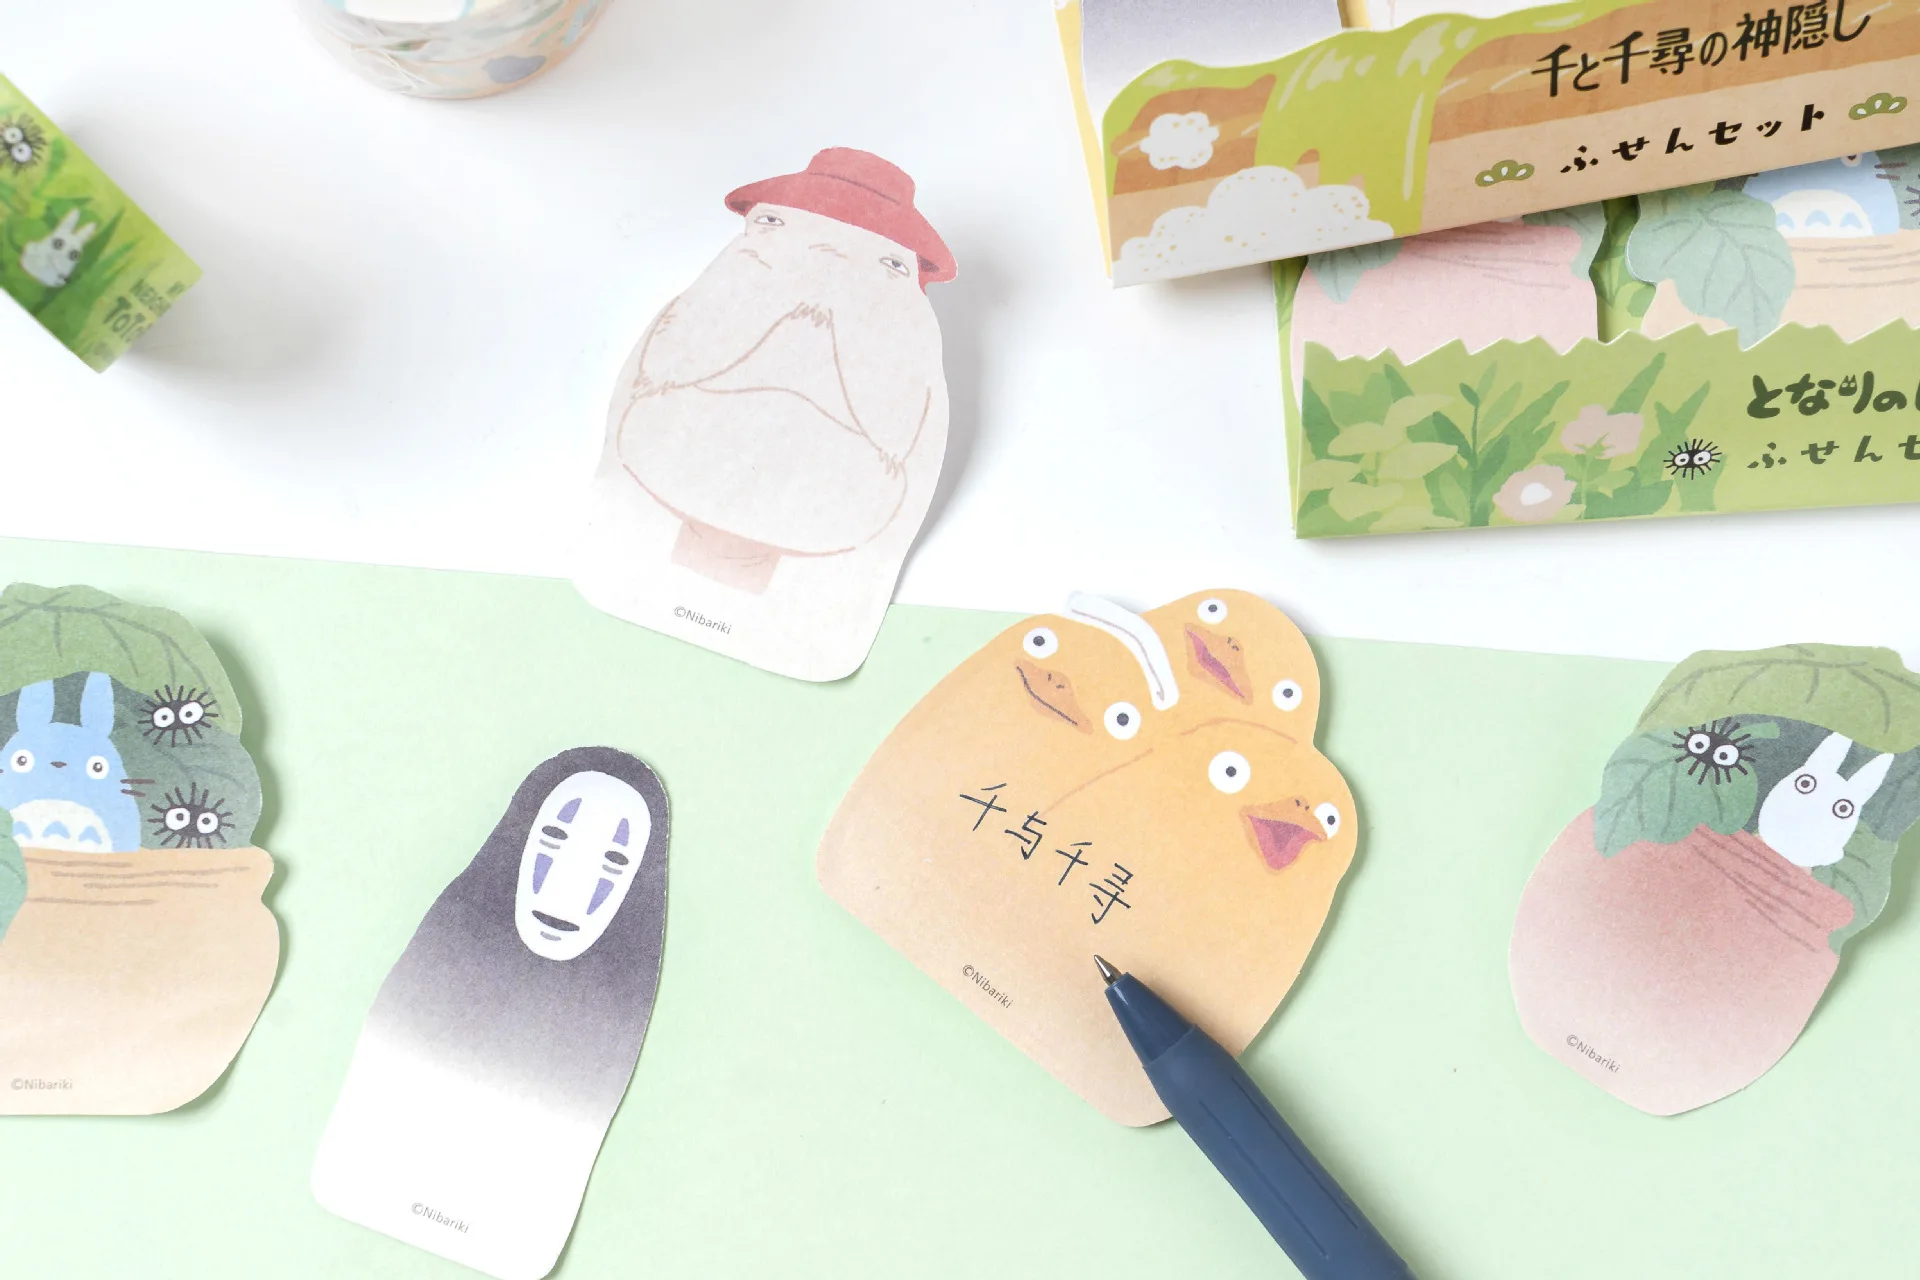 Kawaii No Face Man Totoro Sticky Notes Memo Pad Diary Stationary Flakes Scrapbook Decorative Cute Cartoon N Times Sticky